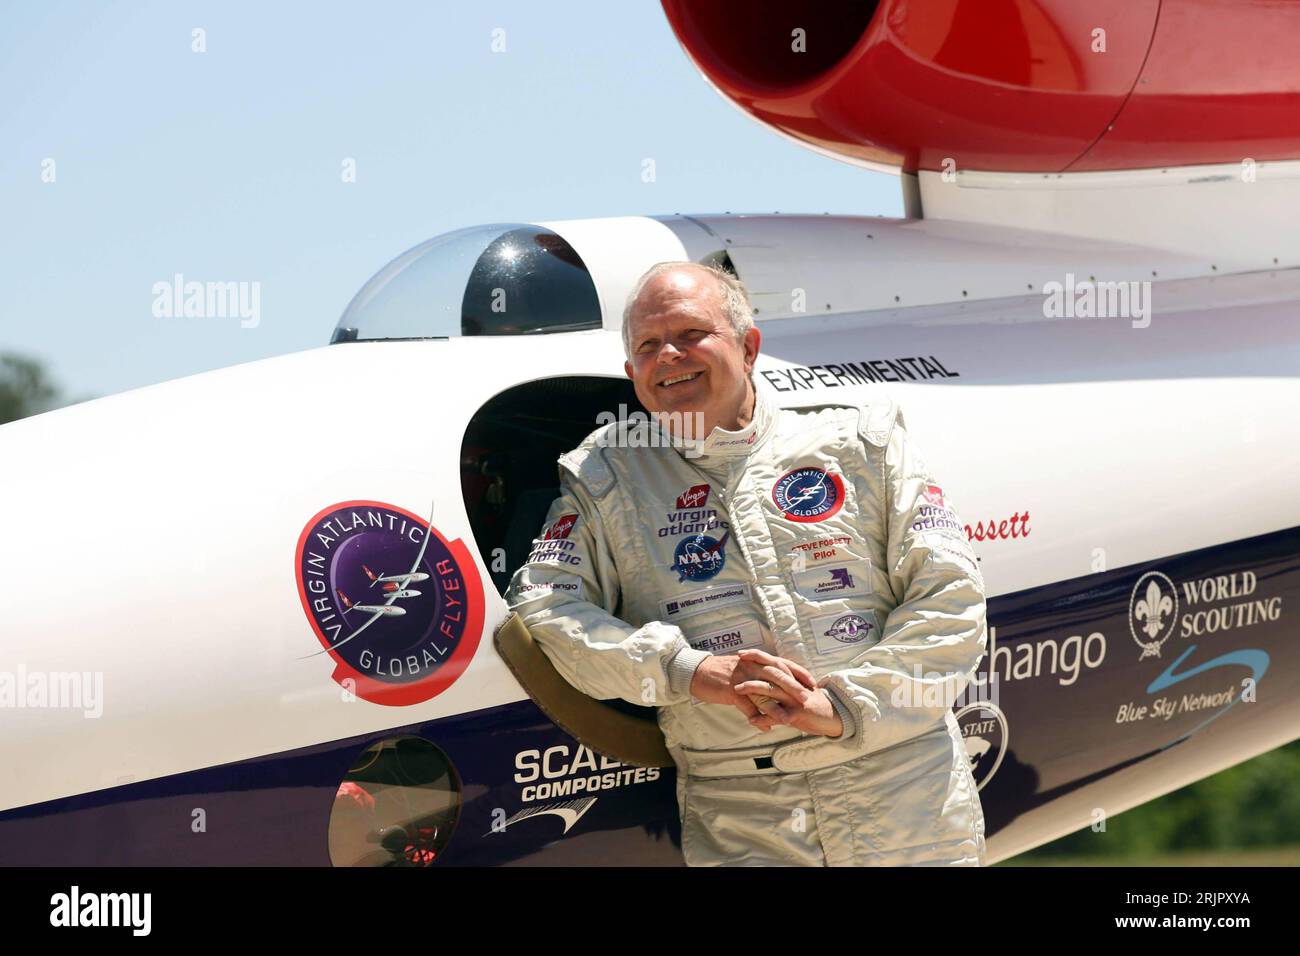 Weltumflieger Steve Fossett (USA) vor seinem Leichtflugzeug Virgin Atlantic Global Flyer am Steven F. Udvar-Hazy Center des National Air and Space Museums in Chantilly/Virginia in den Vereinigten Staaten von Amerika - PUBLICATIONxNOTxINxCHN Banque D'Images